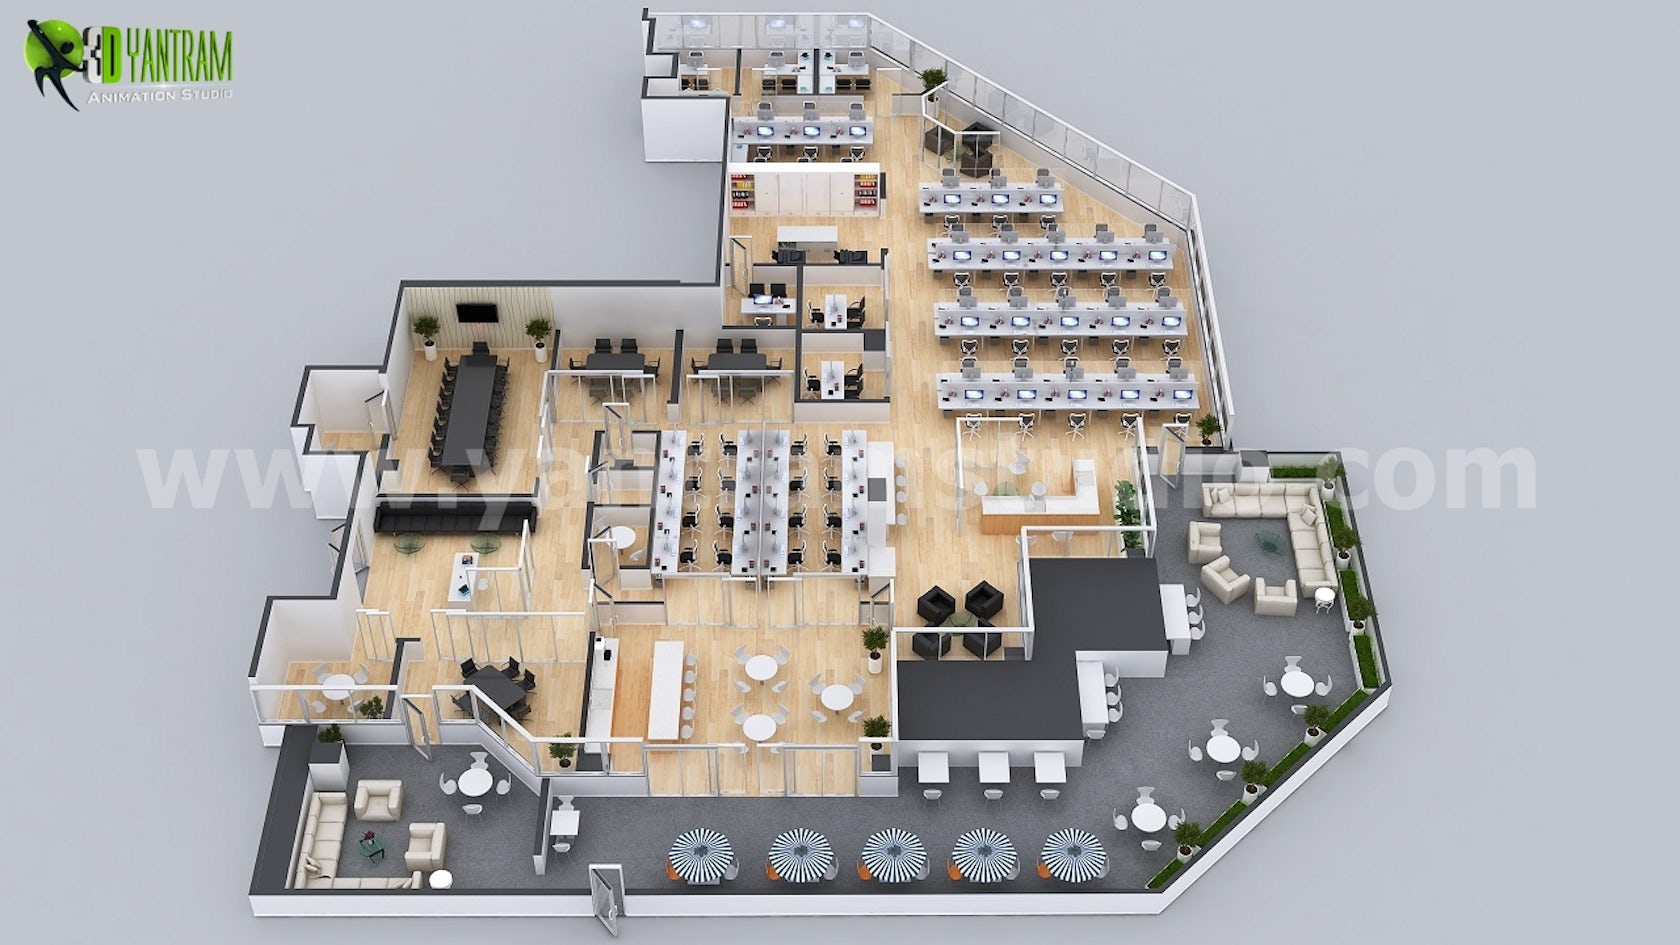 Office Space Interactive 3D Virtual Floor Plan by Yantram Floor plan  Designer - Architizer